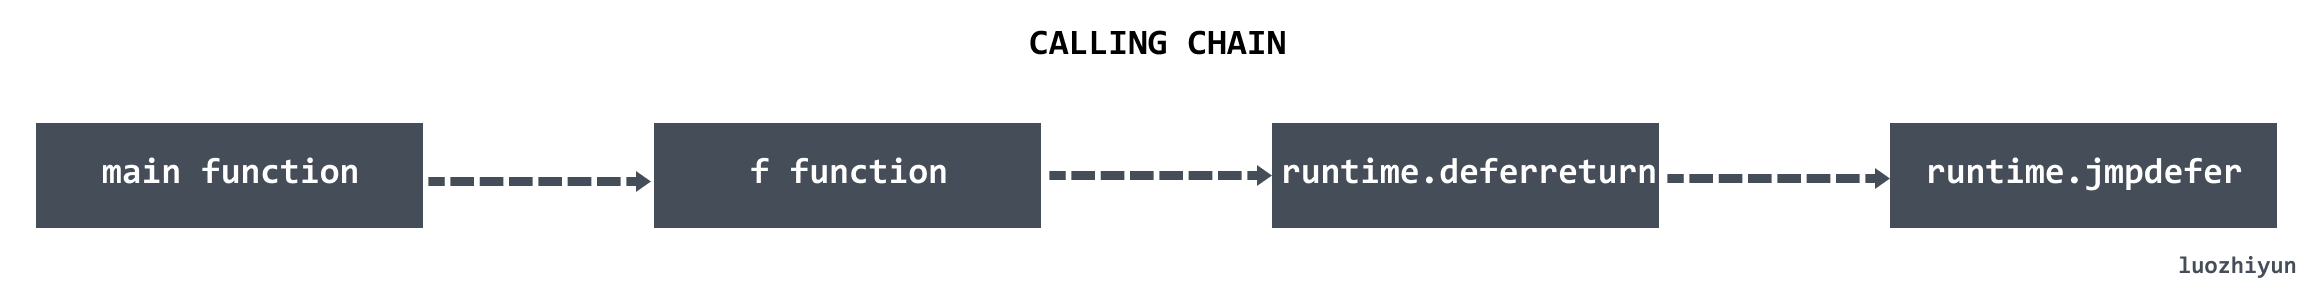 callingchain